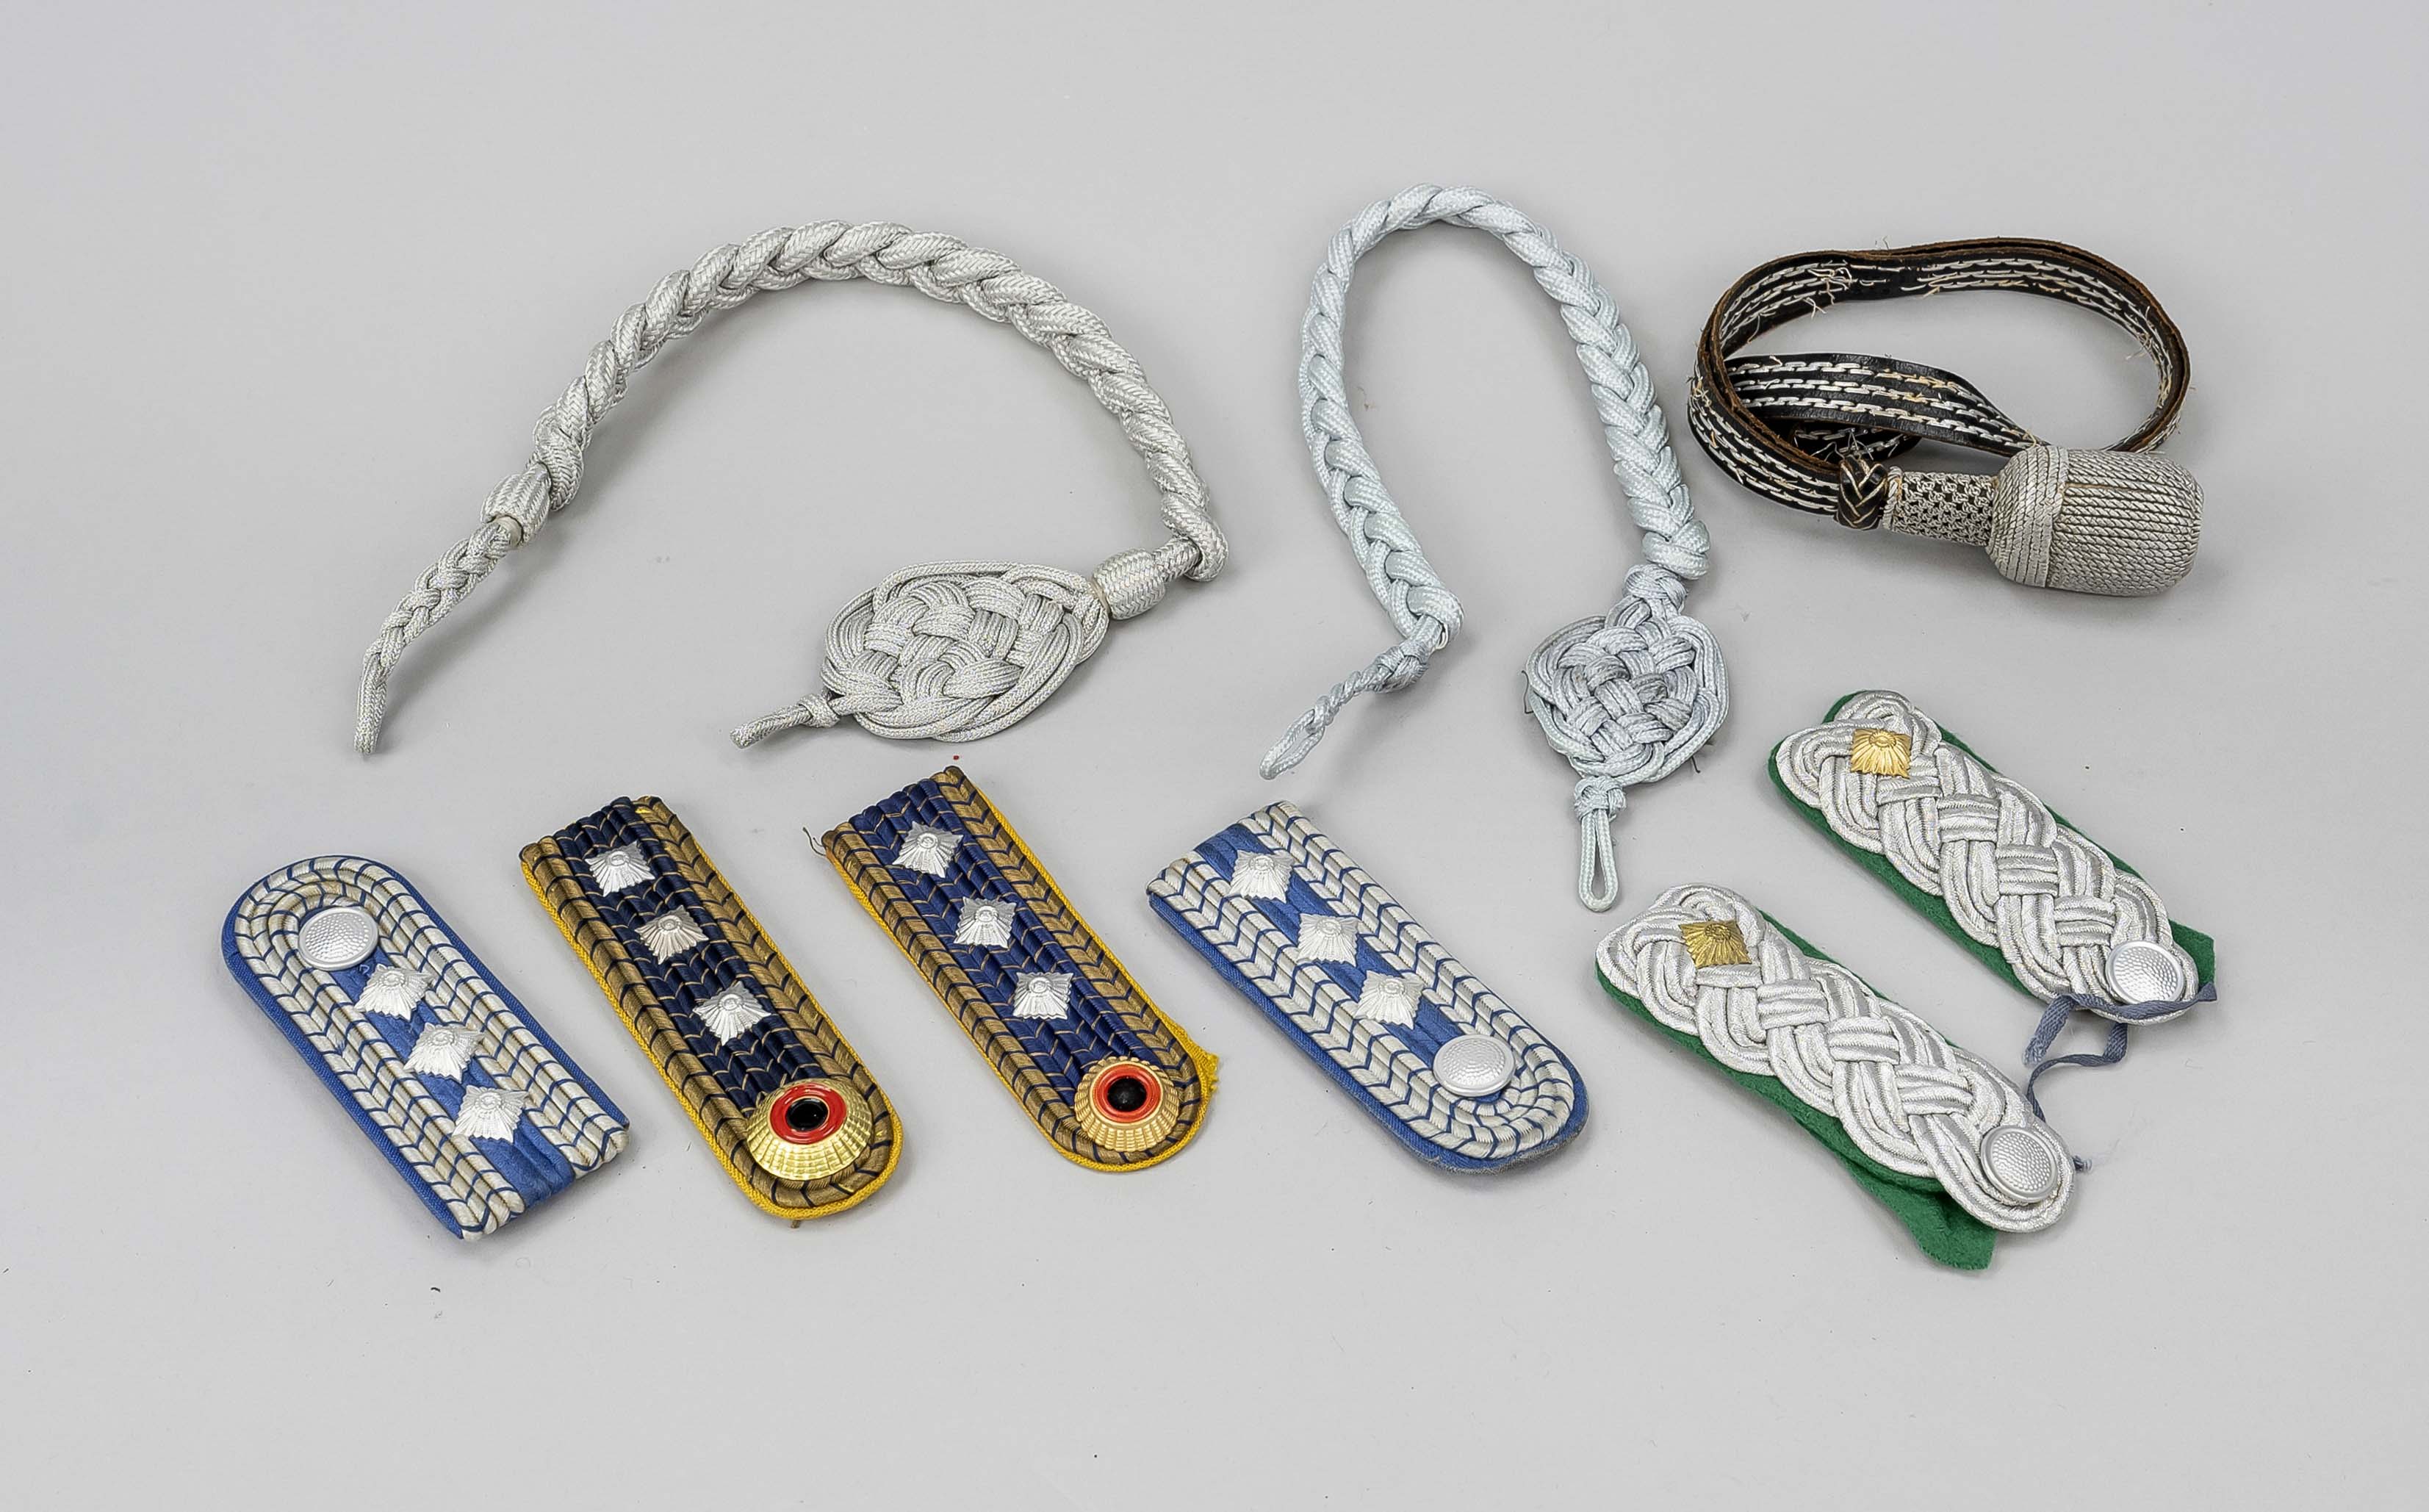 Konv Schützenschnüre and epaulettes, 20th century, fabric and metal. 3 pairs of epaulettes, 2